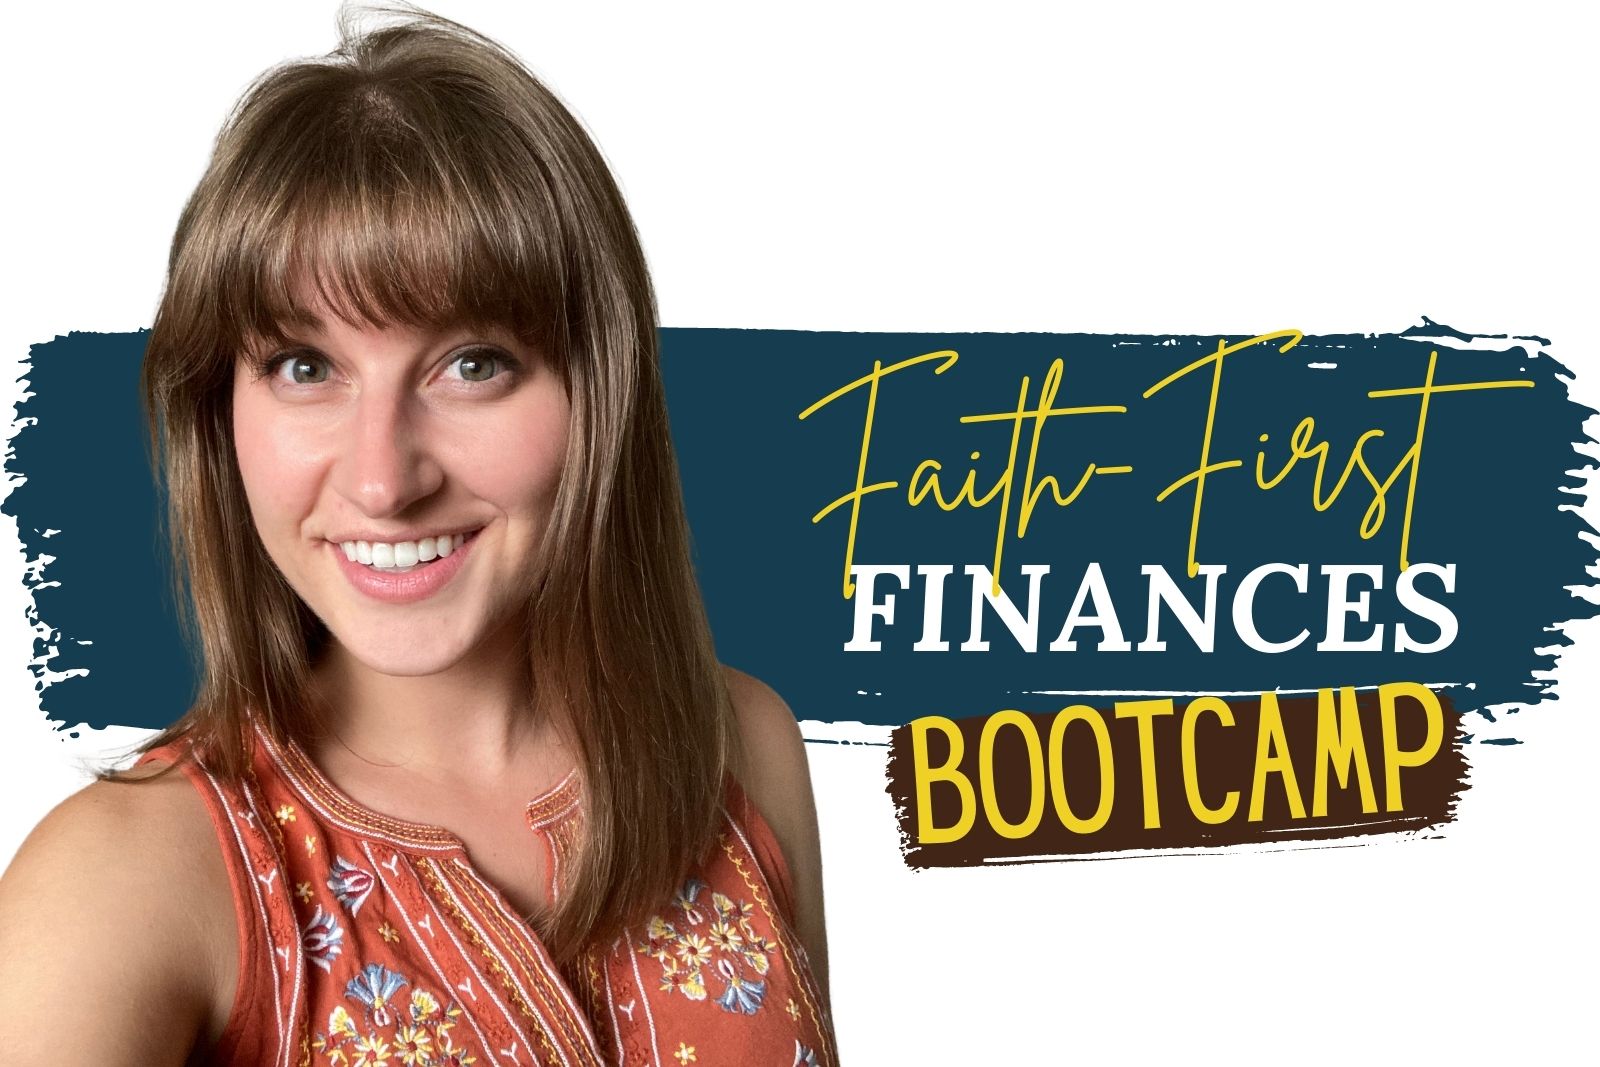 Faith First Finances Bootcamp